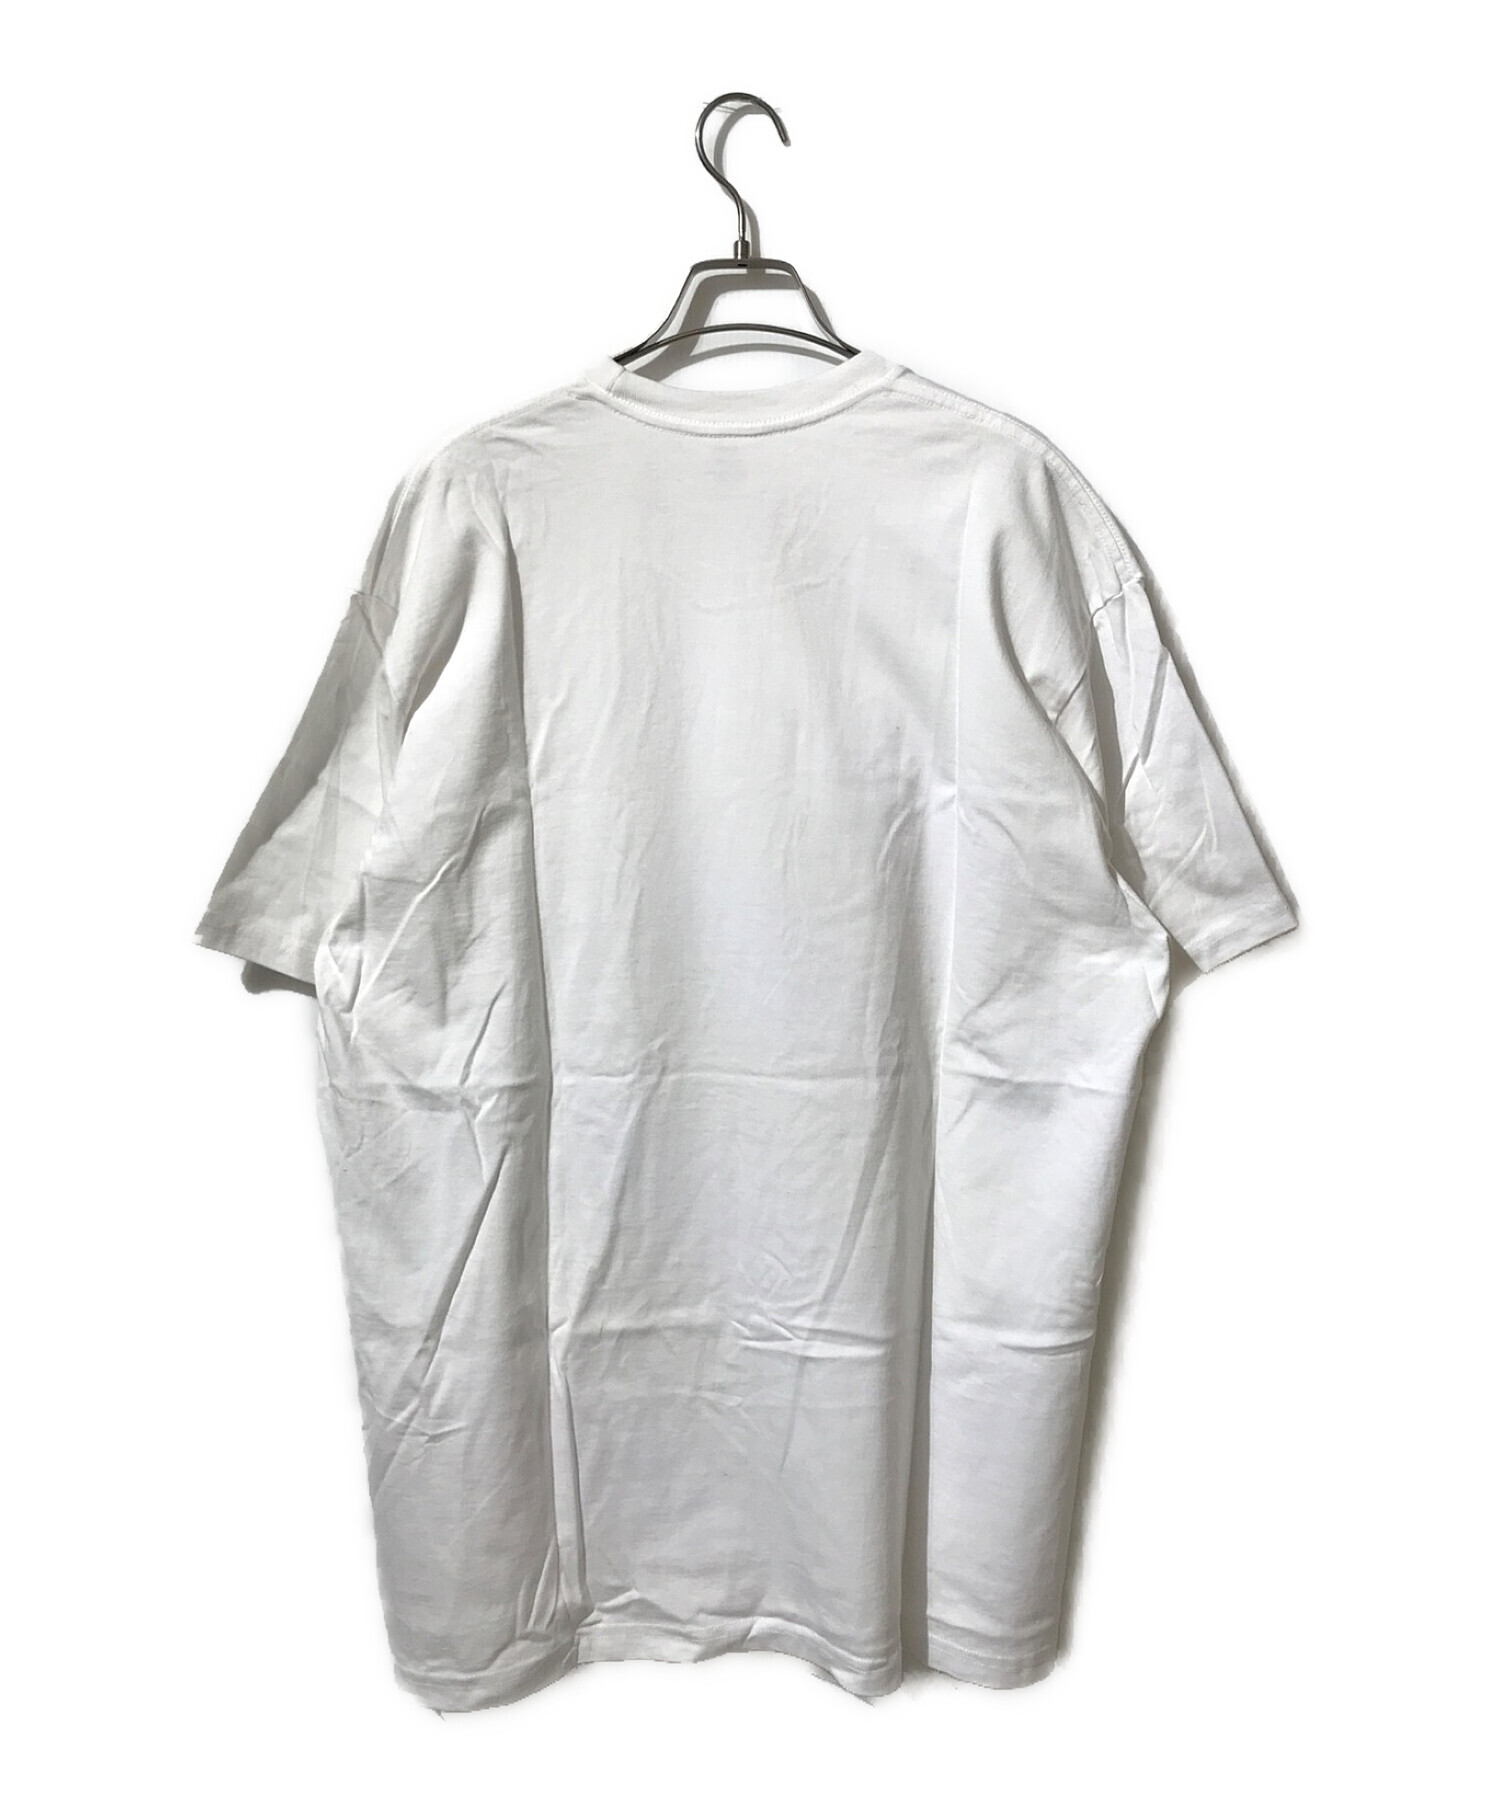 Tシャツ/カットソー(半袖/袖なし)◆Supreme Verify Tee XLサイズ◆シュプリーム